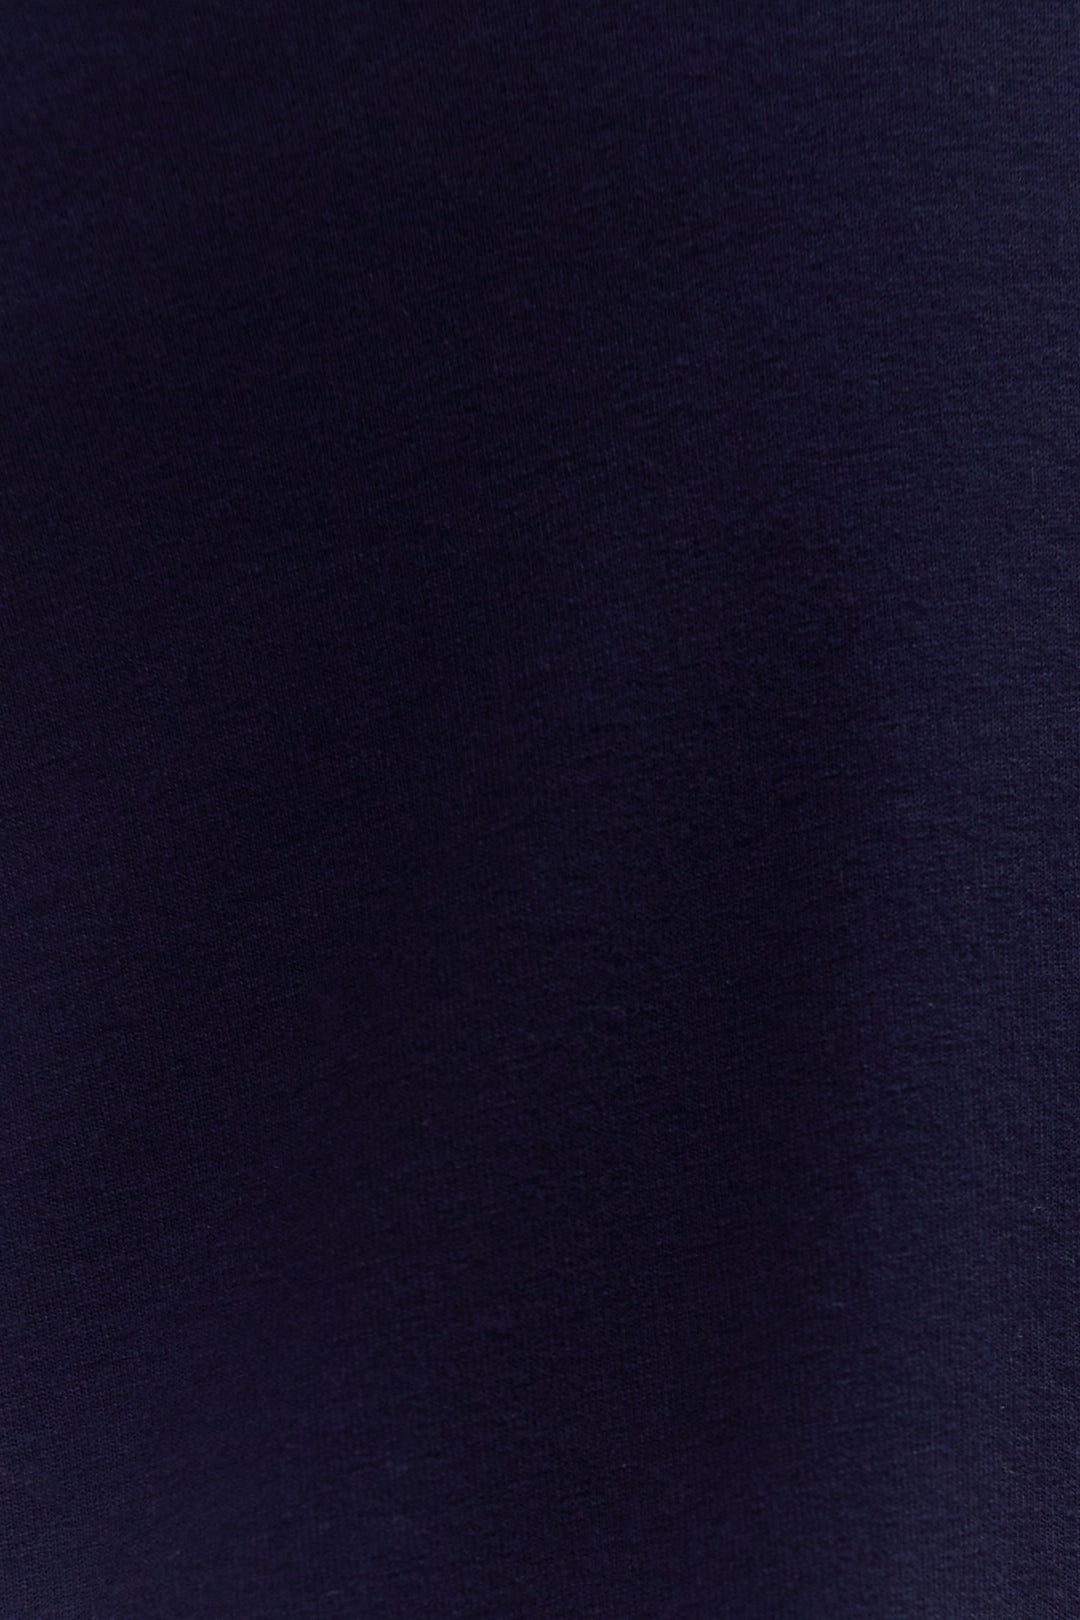 Robe bleu marine à bretelles | Angelina JOELLE Collection